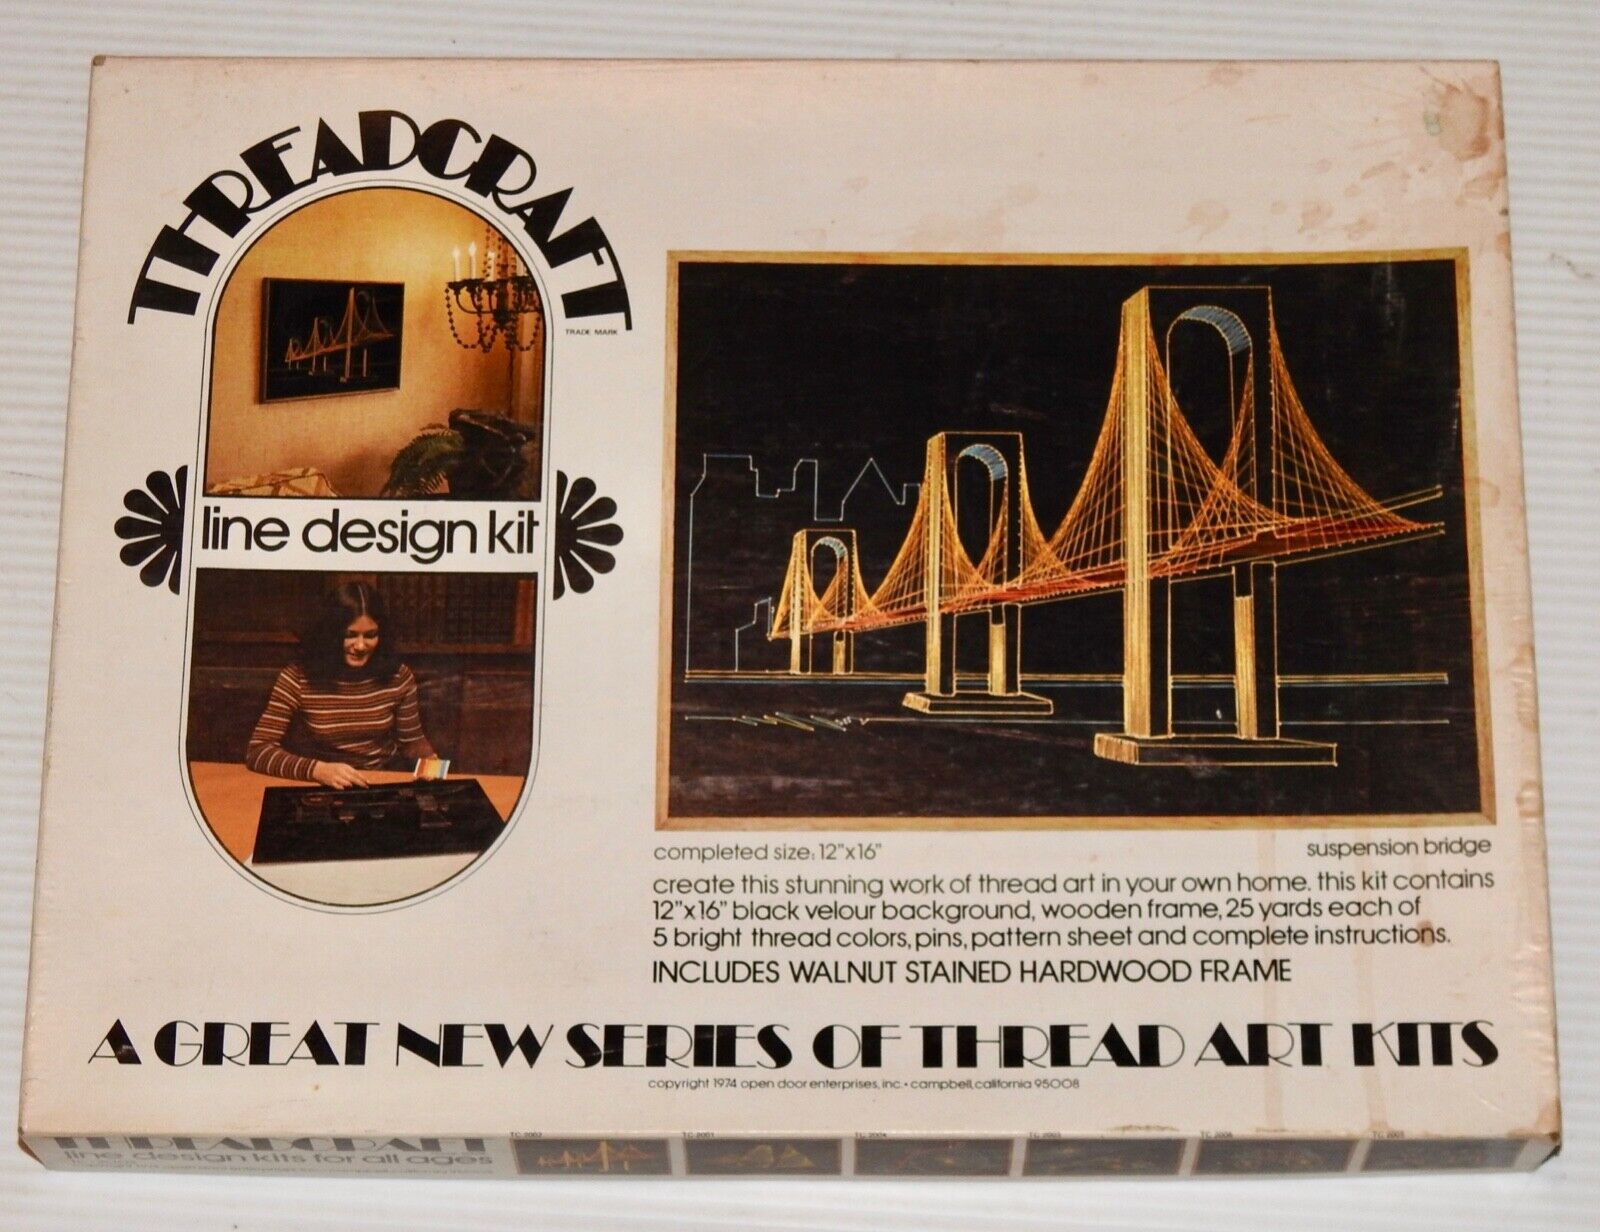 Threadcraft Line Design Kit Suspension Bridge 1974 Thread Art 12 x 16 Unused